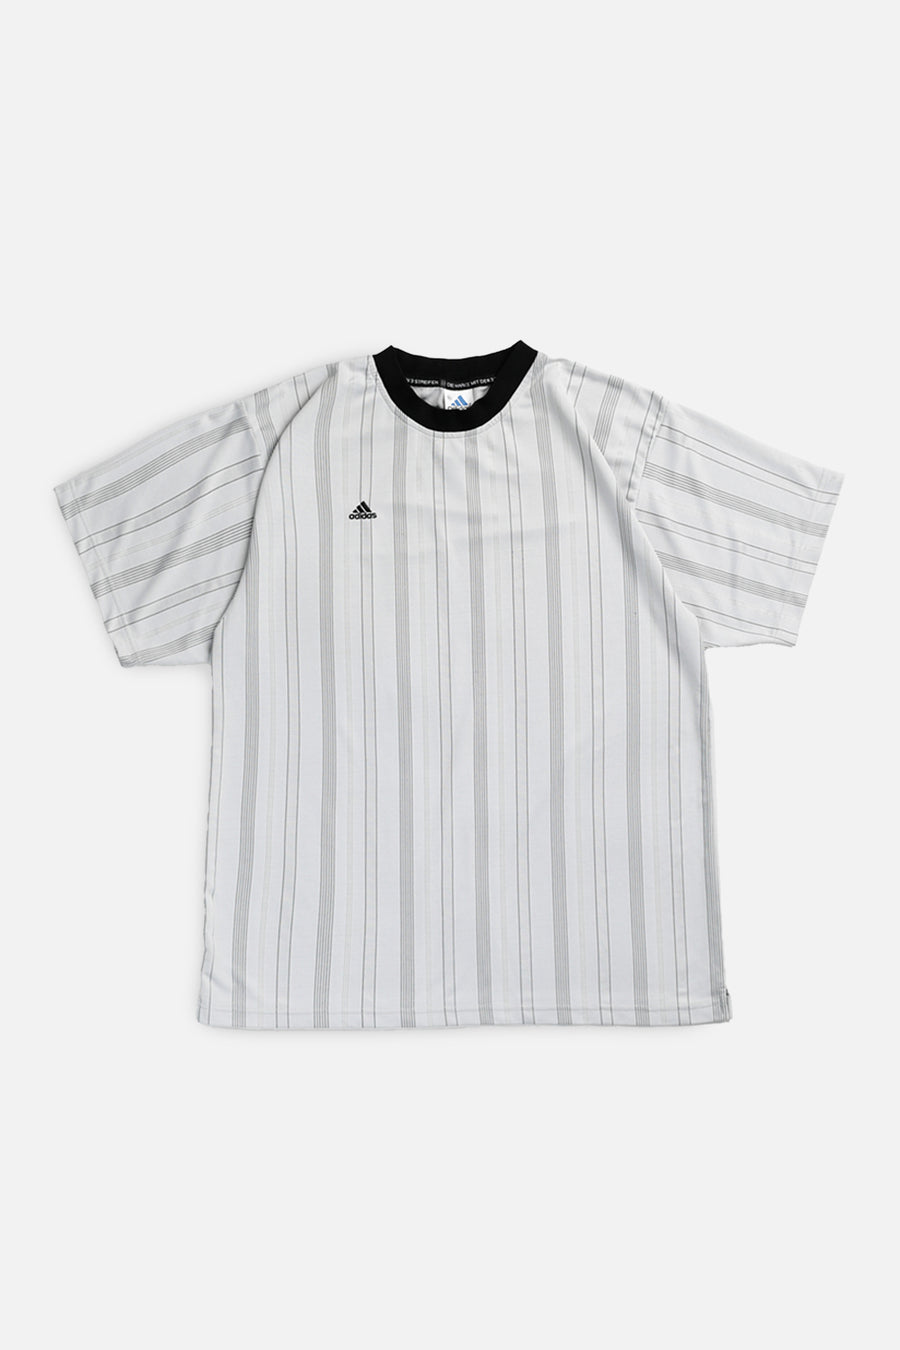 Vintage Adidas Jersey - XL